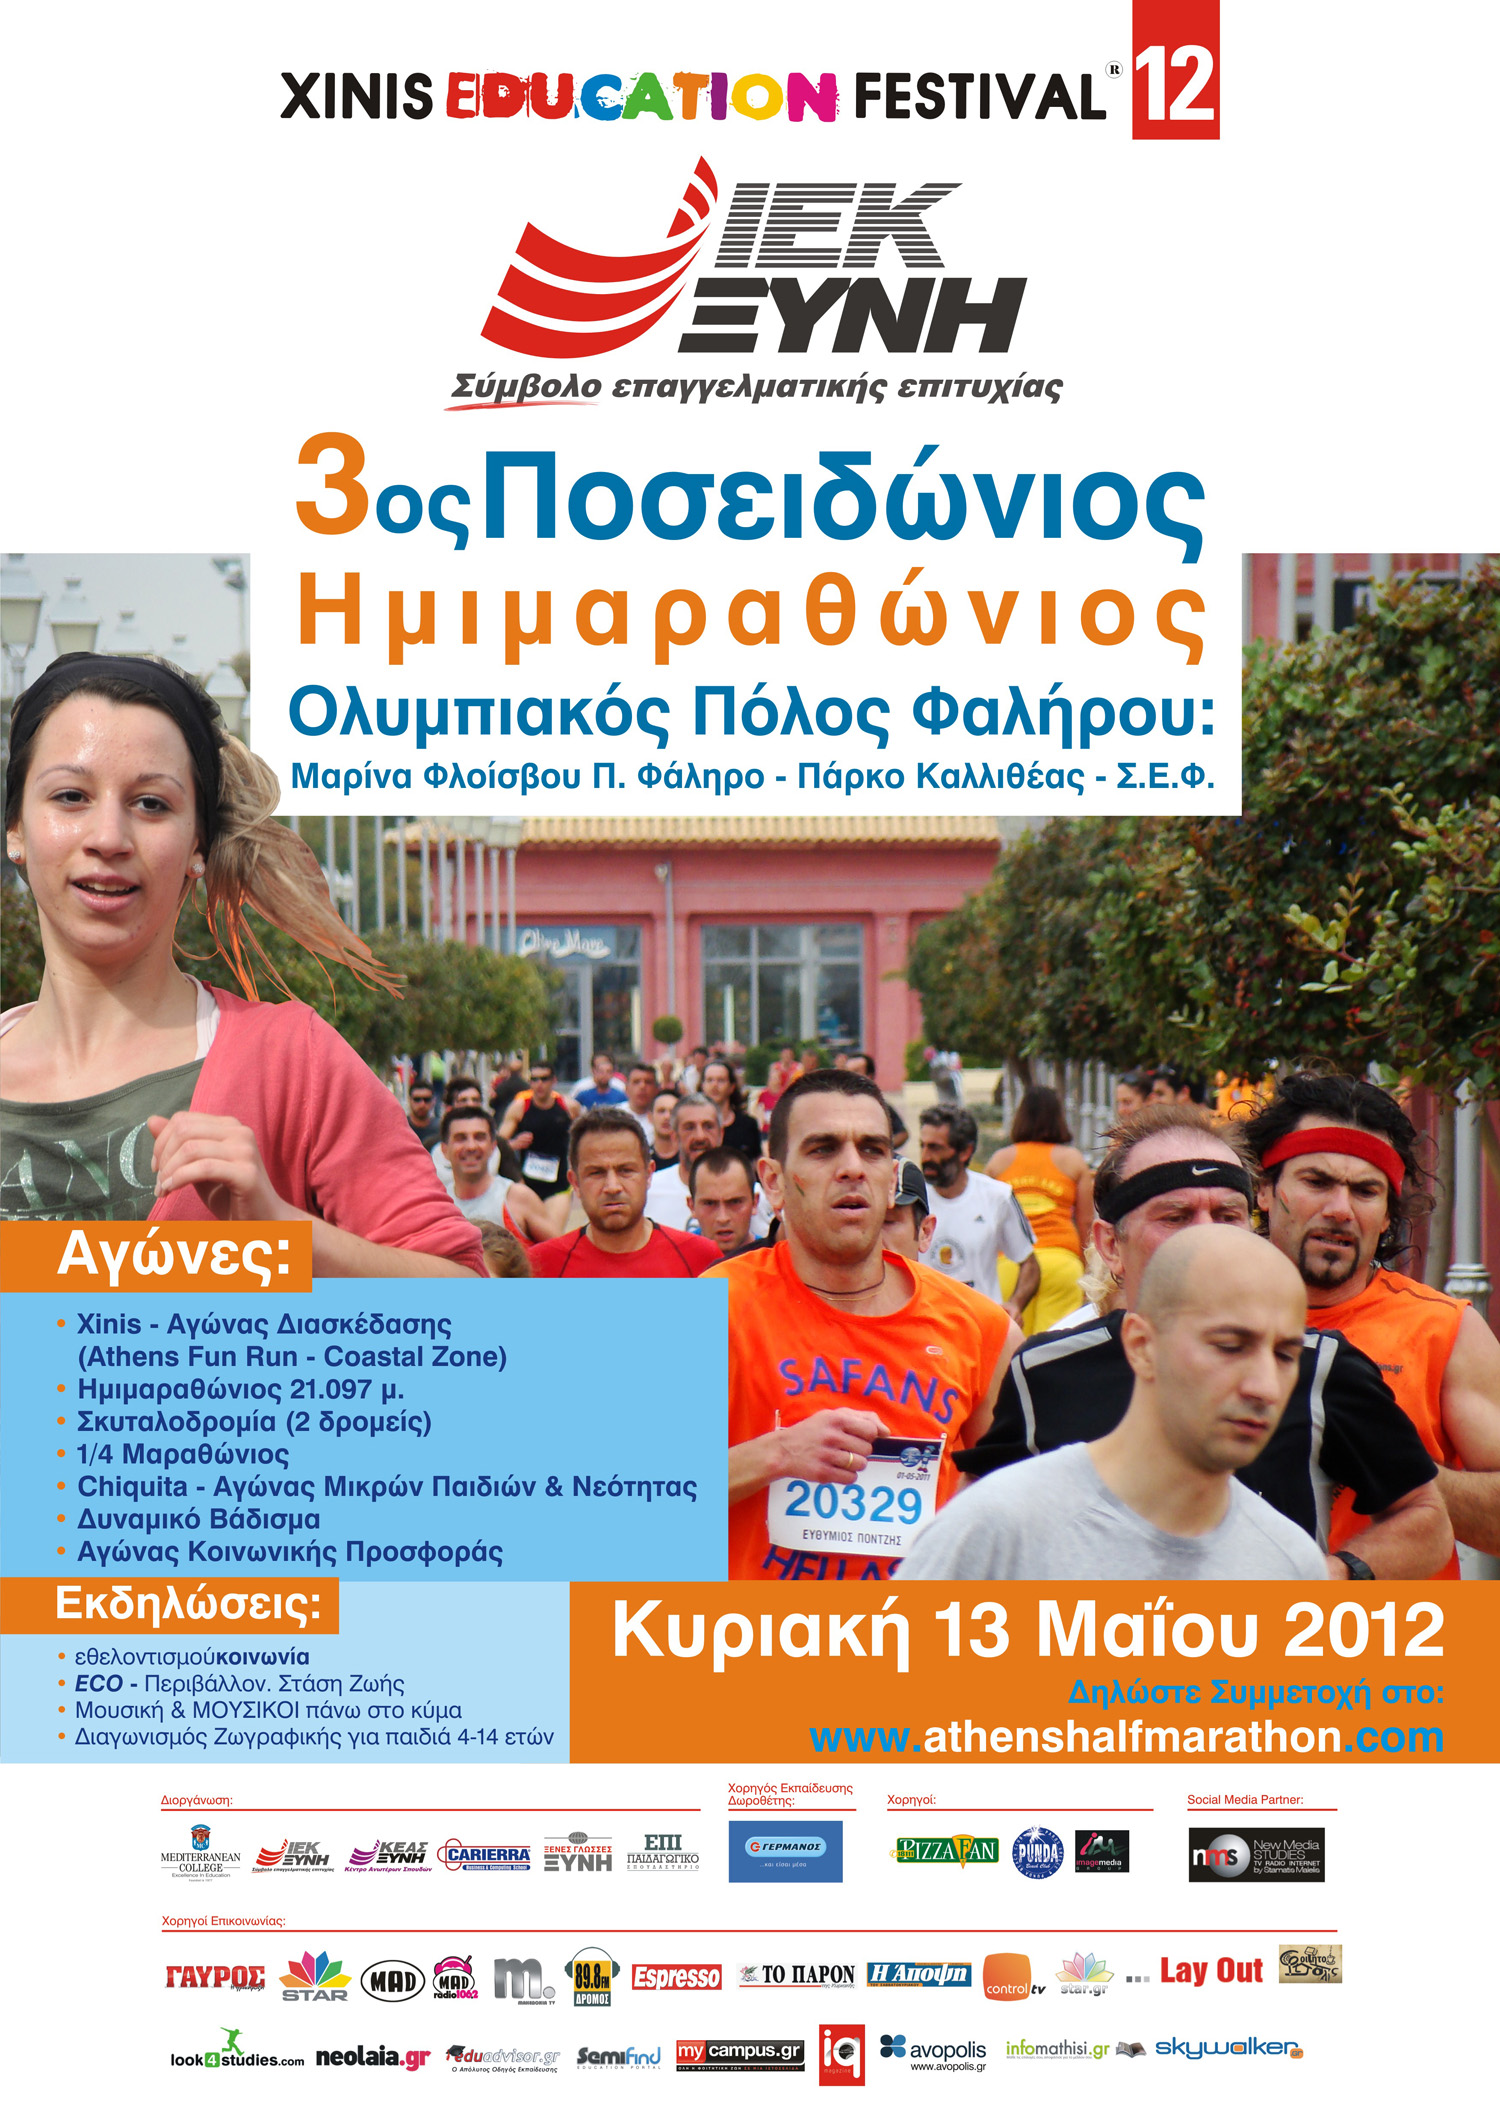 Athens Half Marathon ΙΕΚ ΞΥΝΗ: XINIS EDUCATION FESTIVAL 2012 –GREAT 8 DAYS